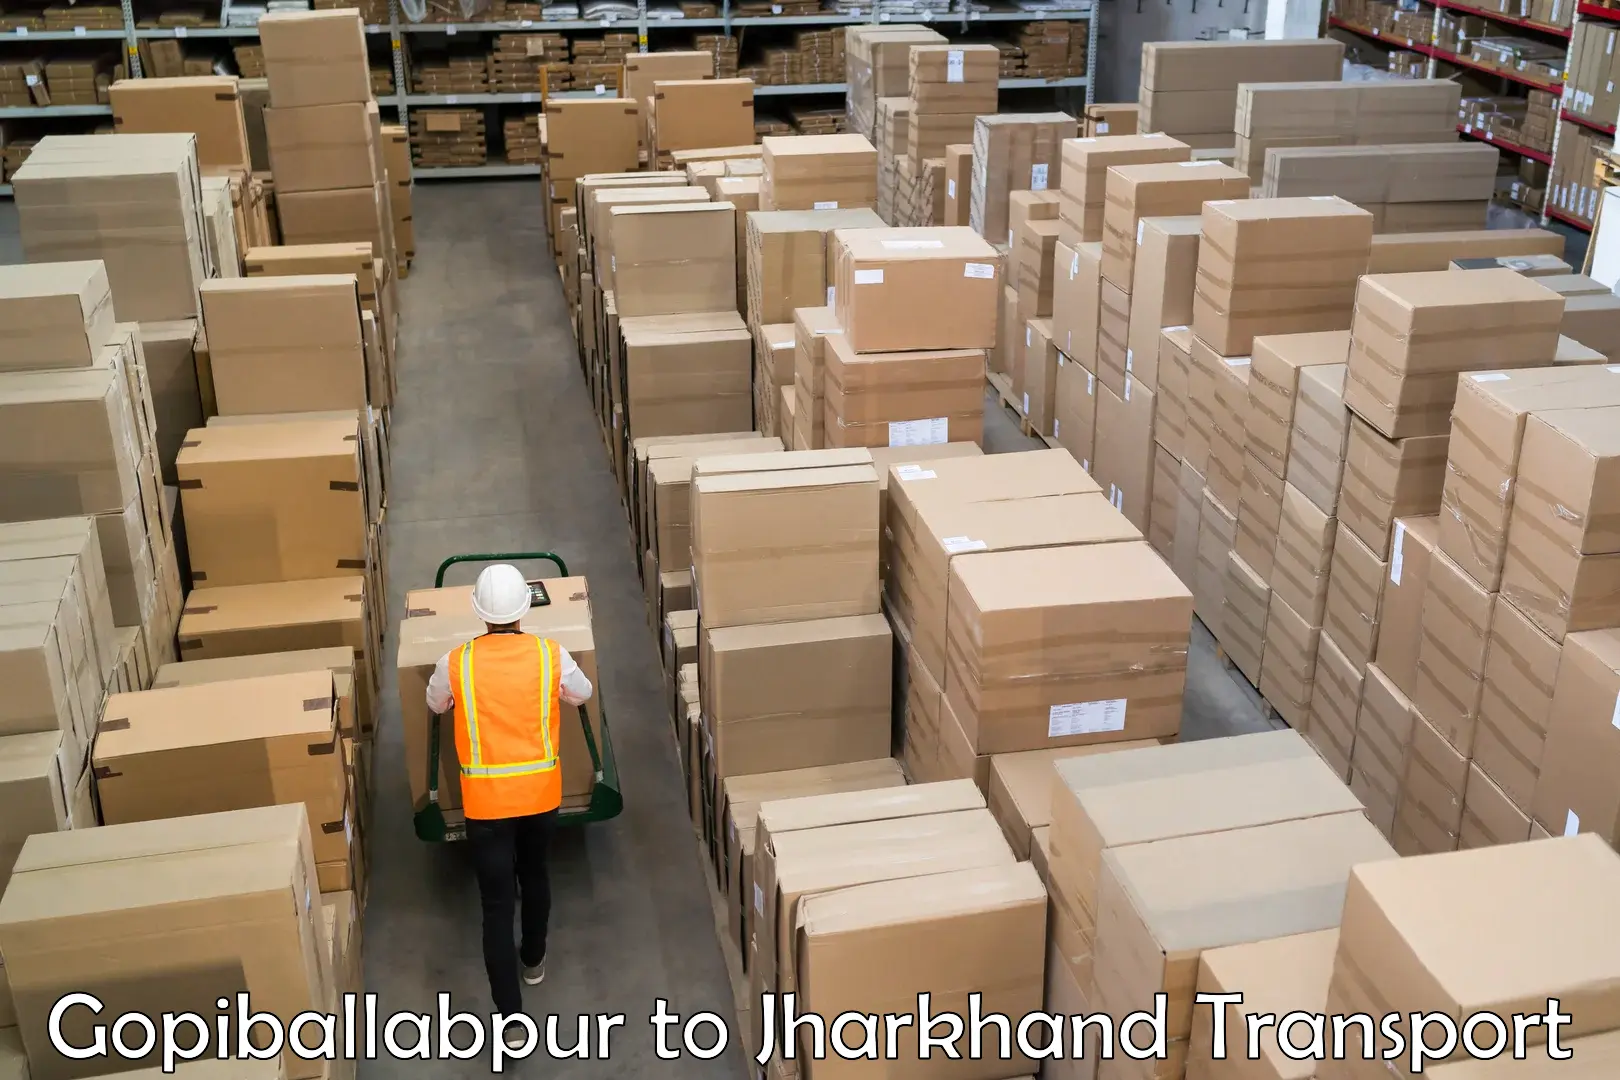 Goods delivery service Gopiballabpur to Medininagar